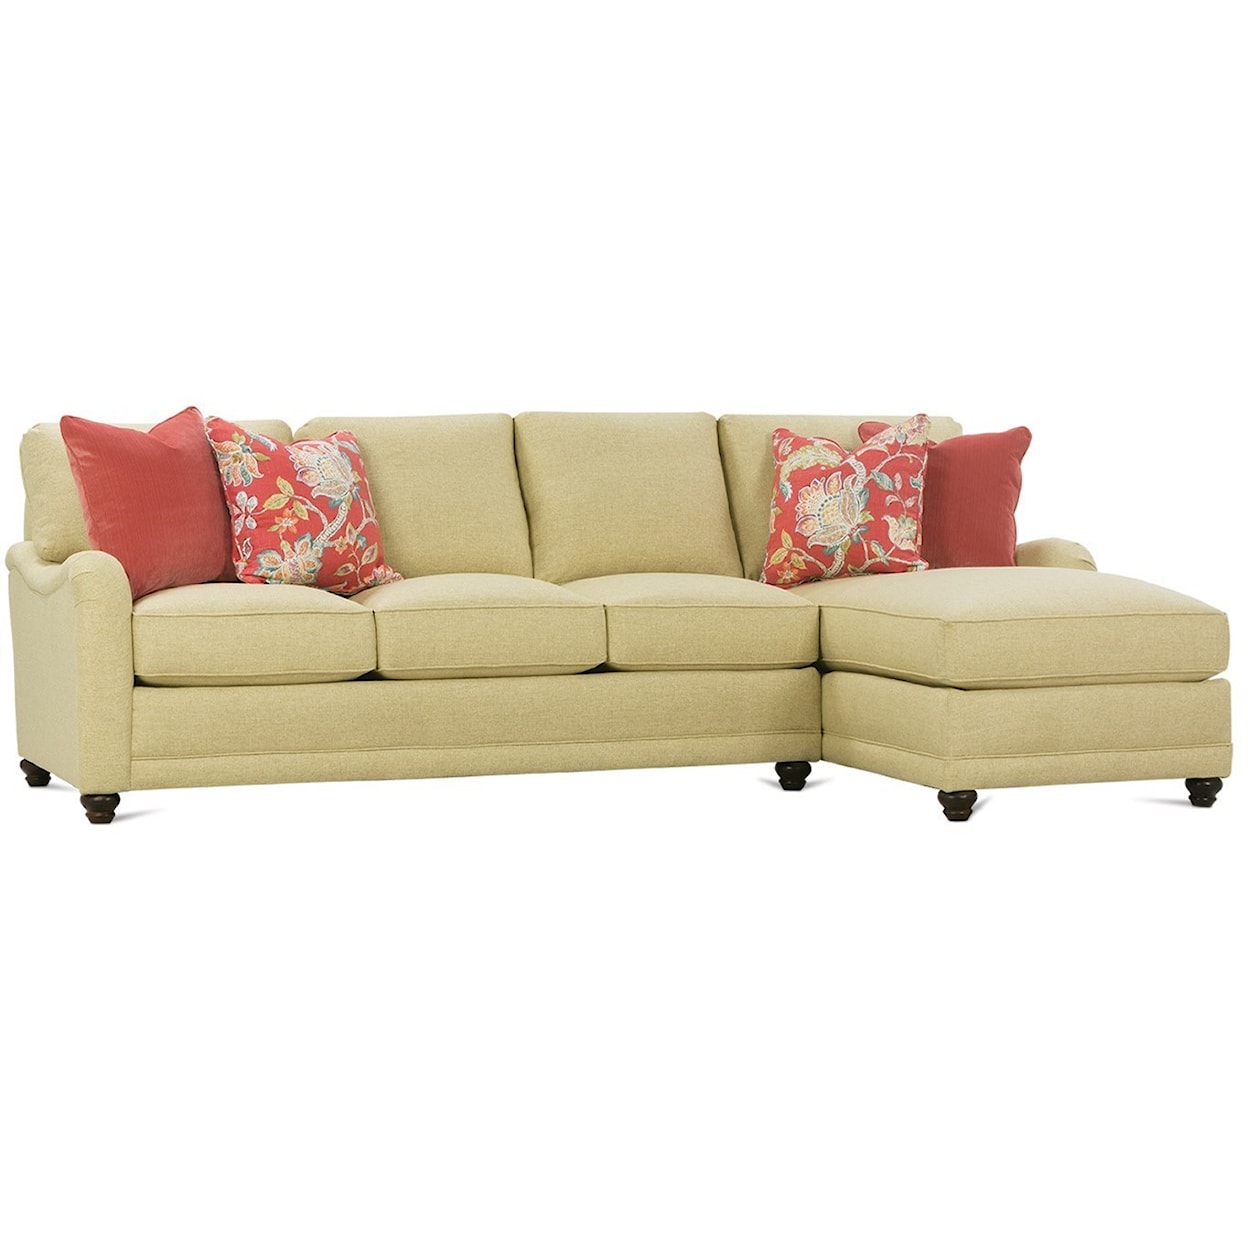 Rowe My Style I Customizable Sectional Sofa